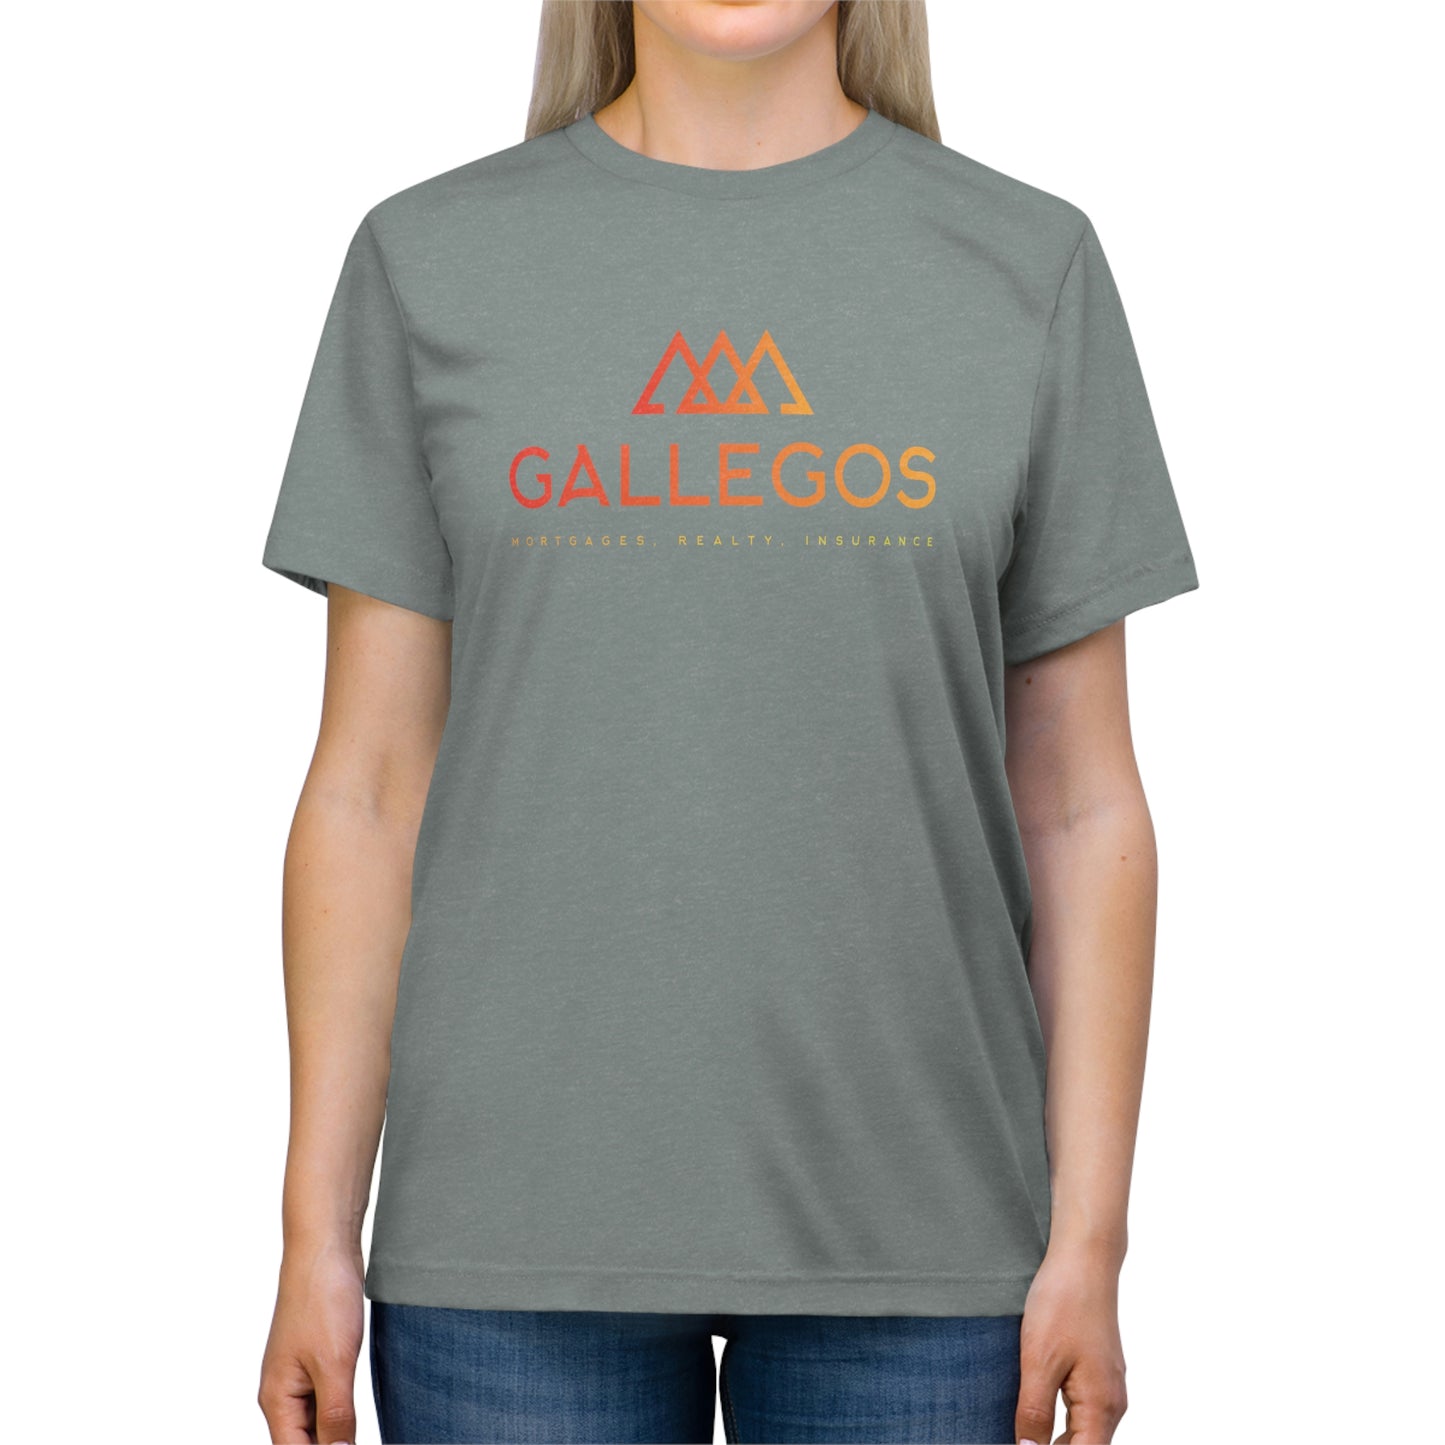 Gallegos Mortgage Triblend T-Shirt